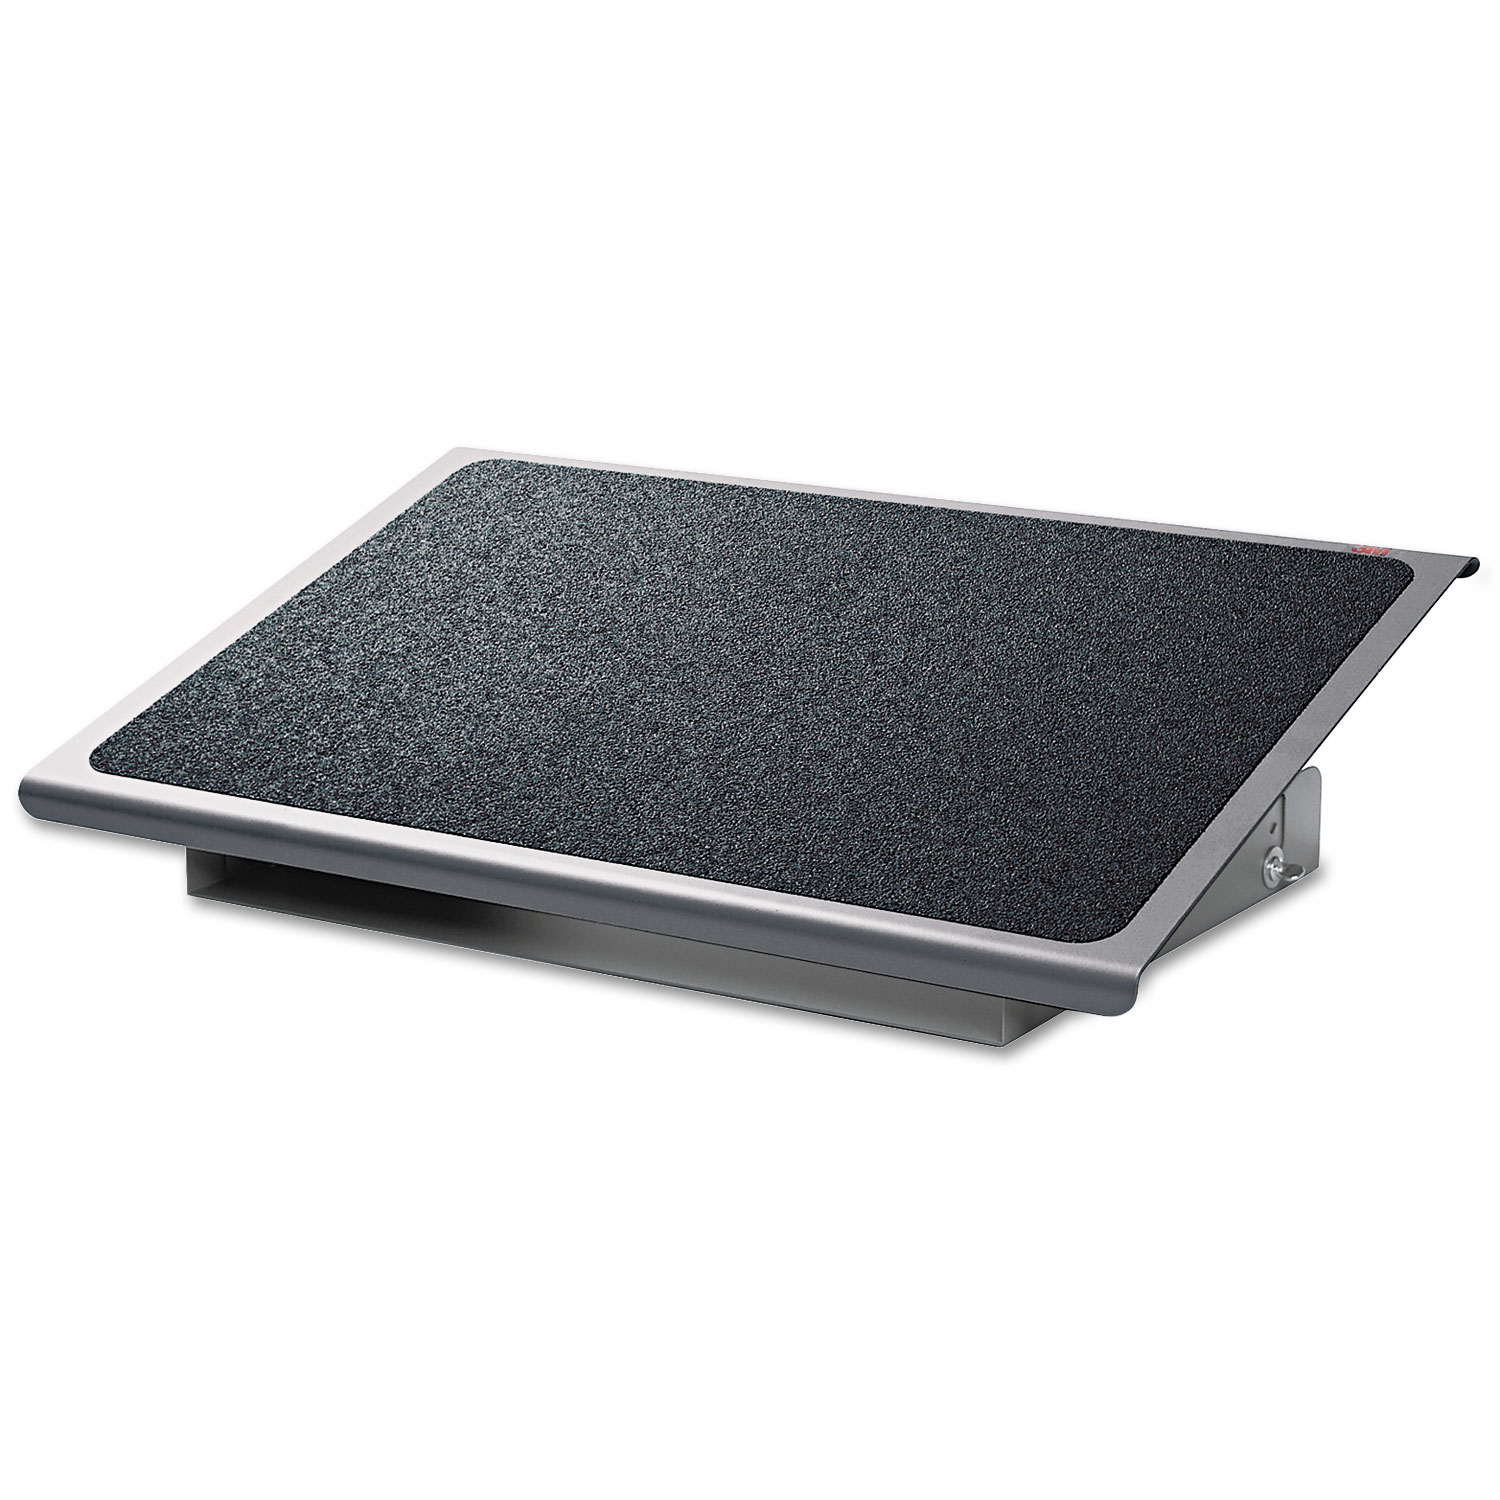  3M FR530CB Adjustable Steel Footrest, Nonslip Surface, 22w x 14d x 4-3/4h, Black/Charcoal (MMMFR530CB) 